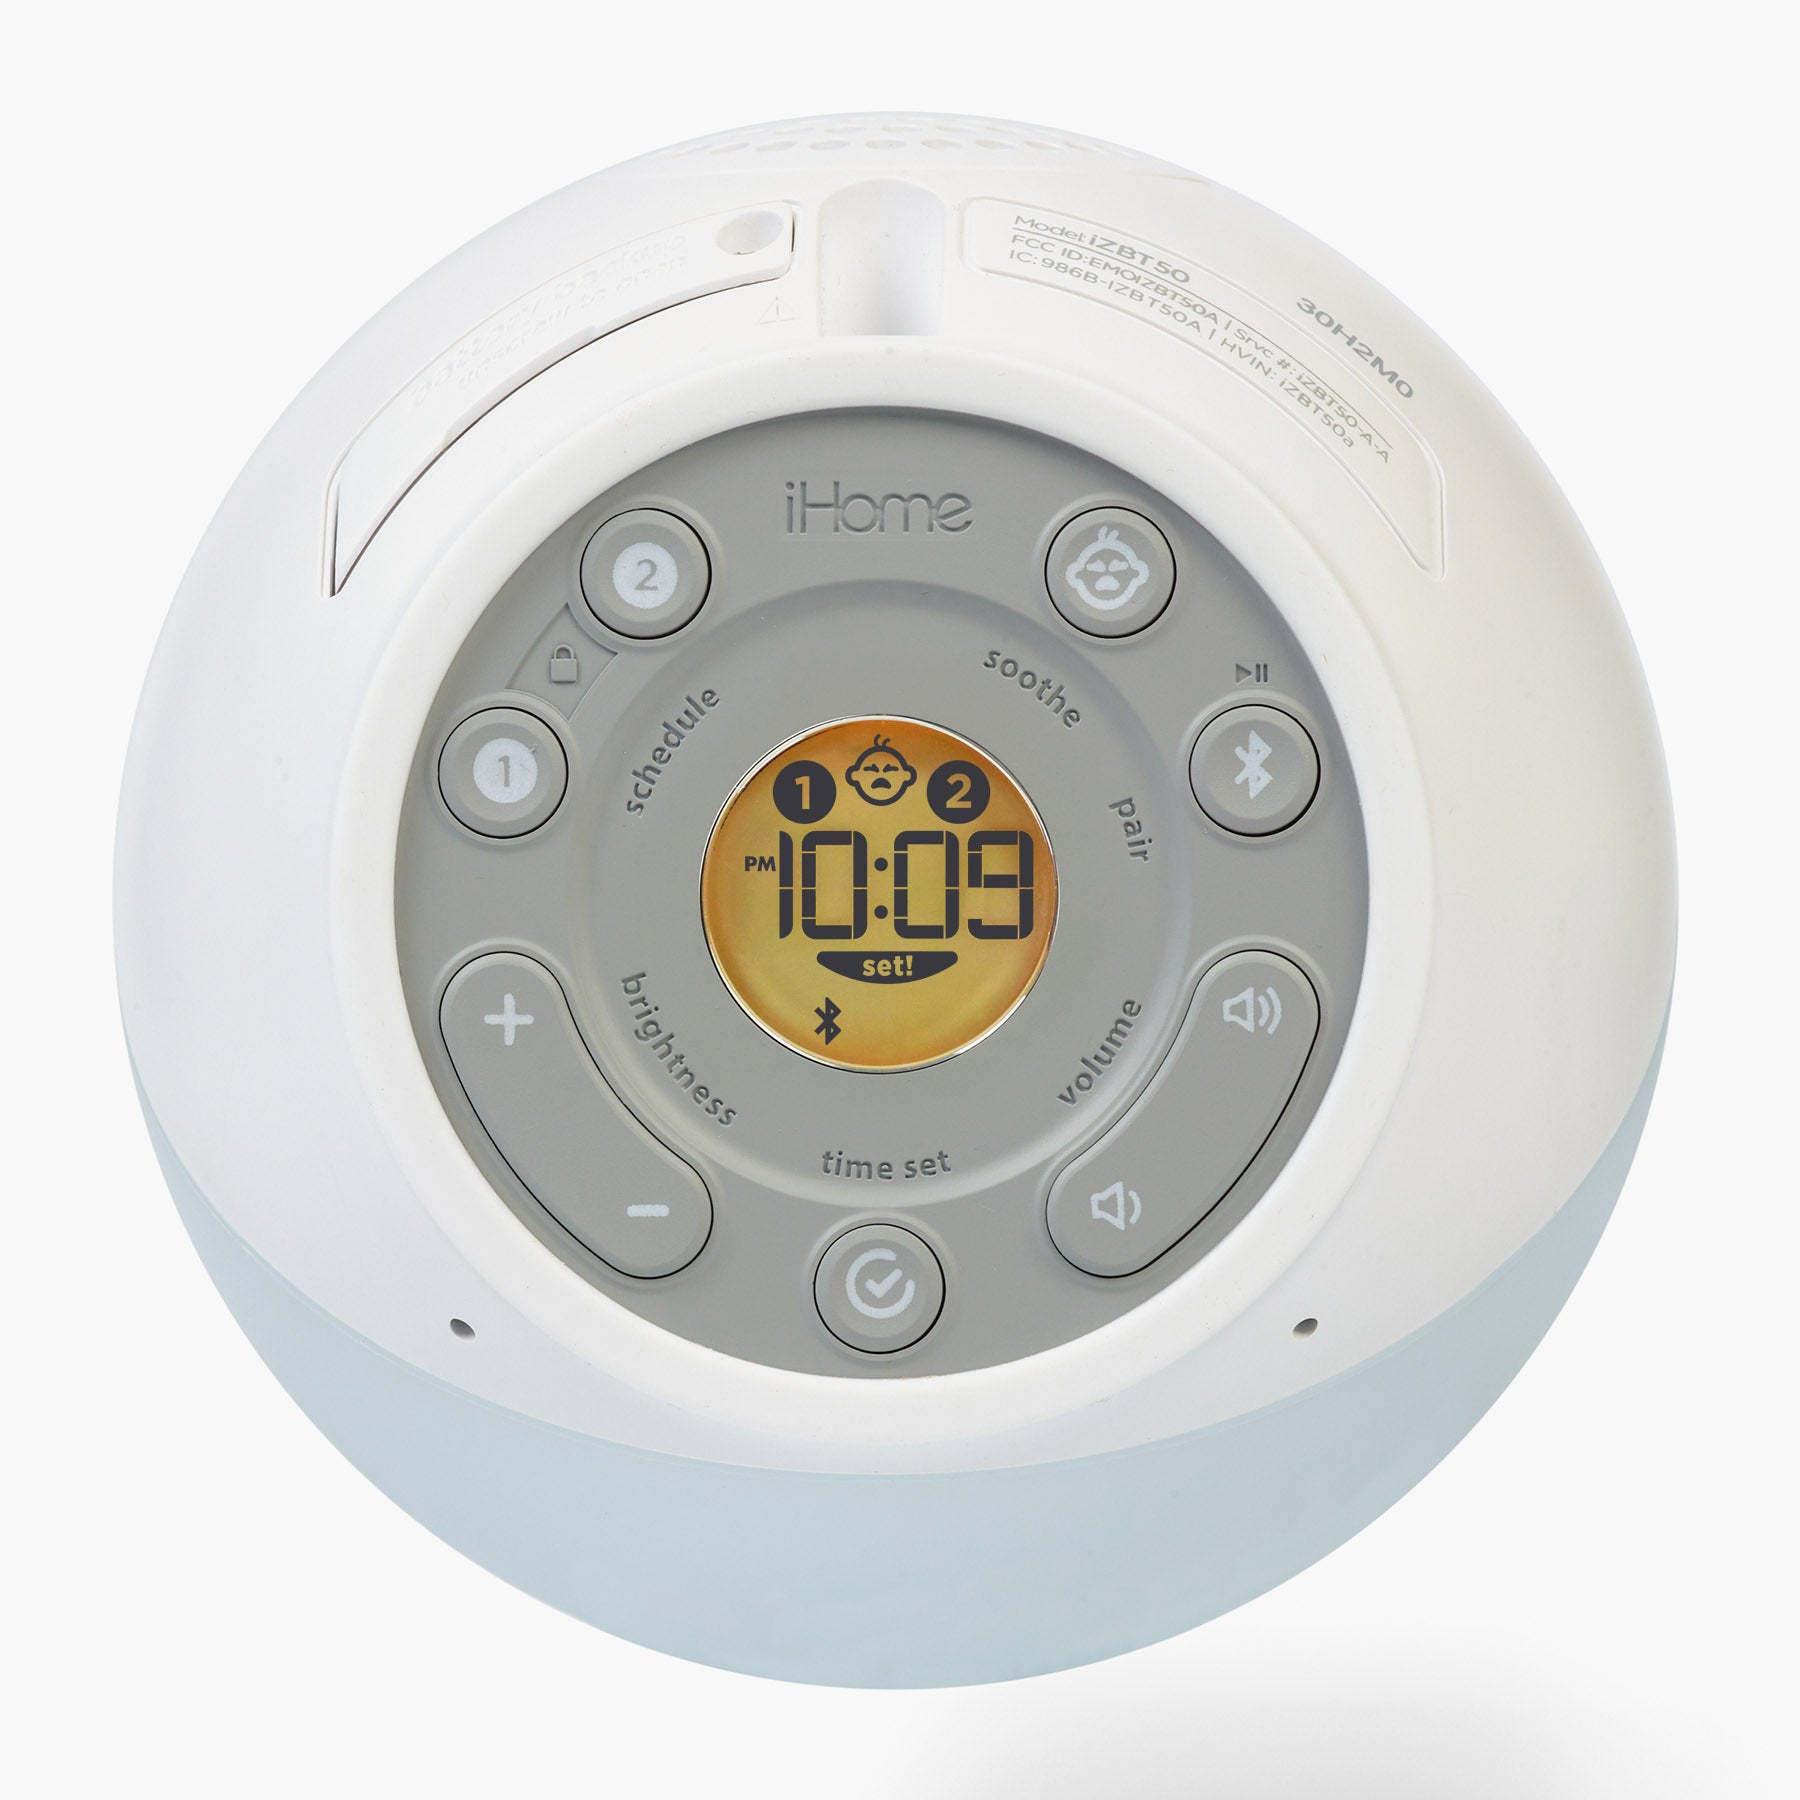 Baby Sound Machine with Night Light and Cry Sensor (iZBT50)